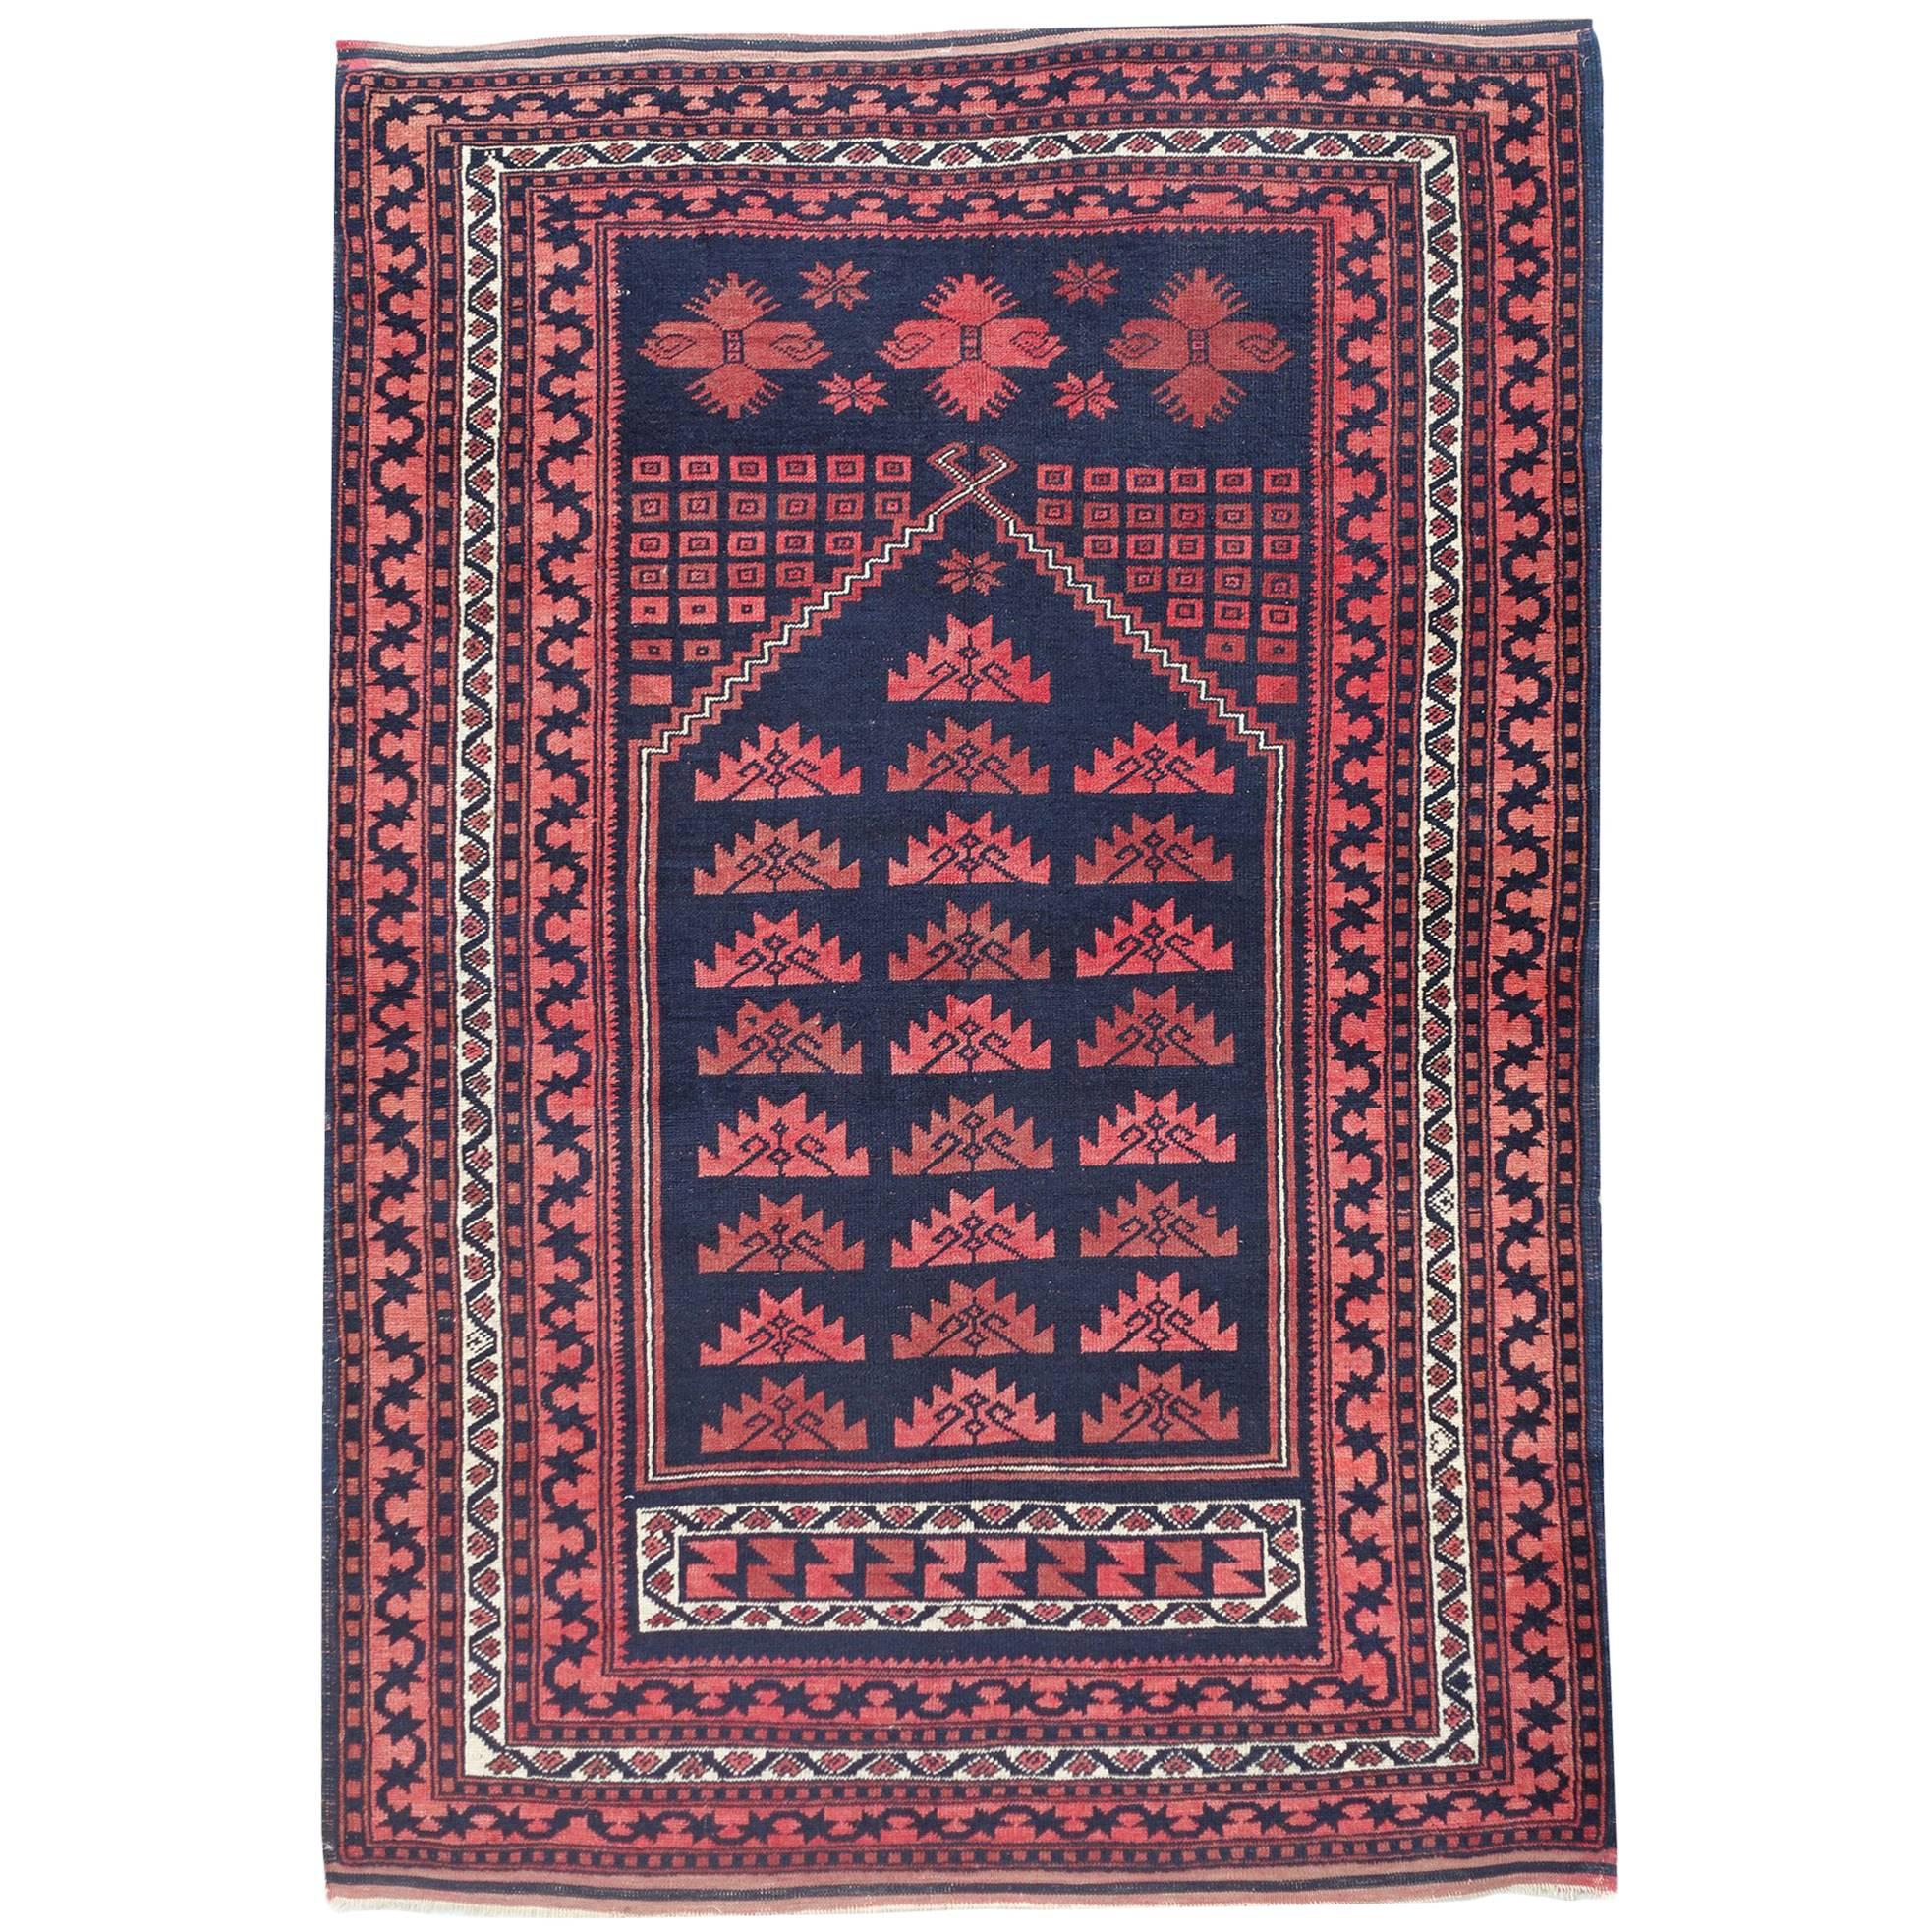 Vintage Turkish Kilim/Rug from Yagcibedir